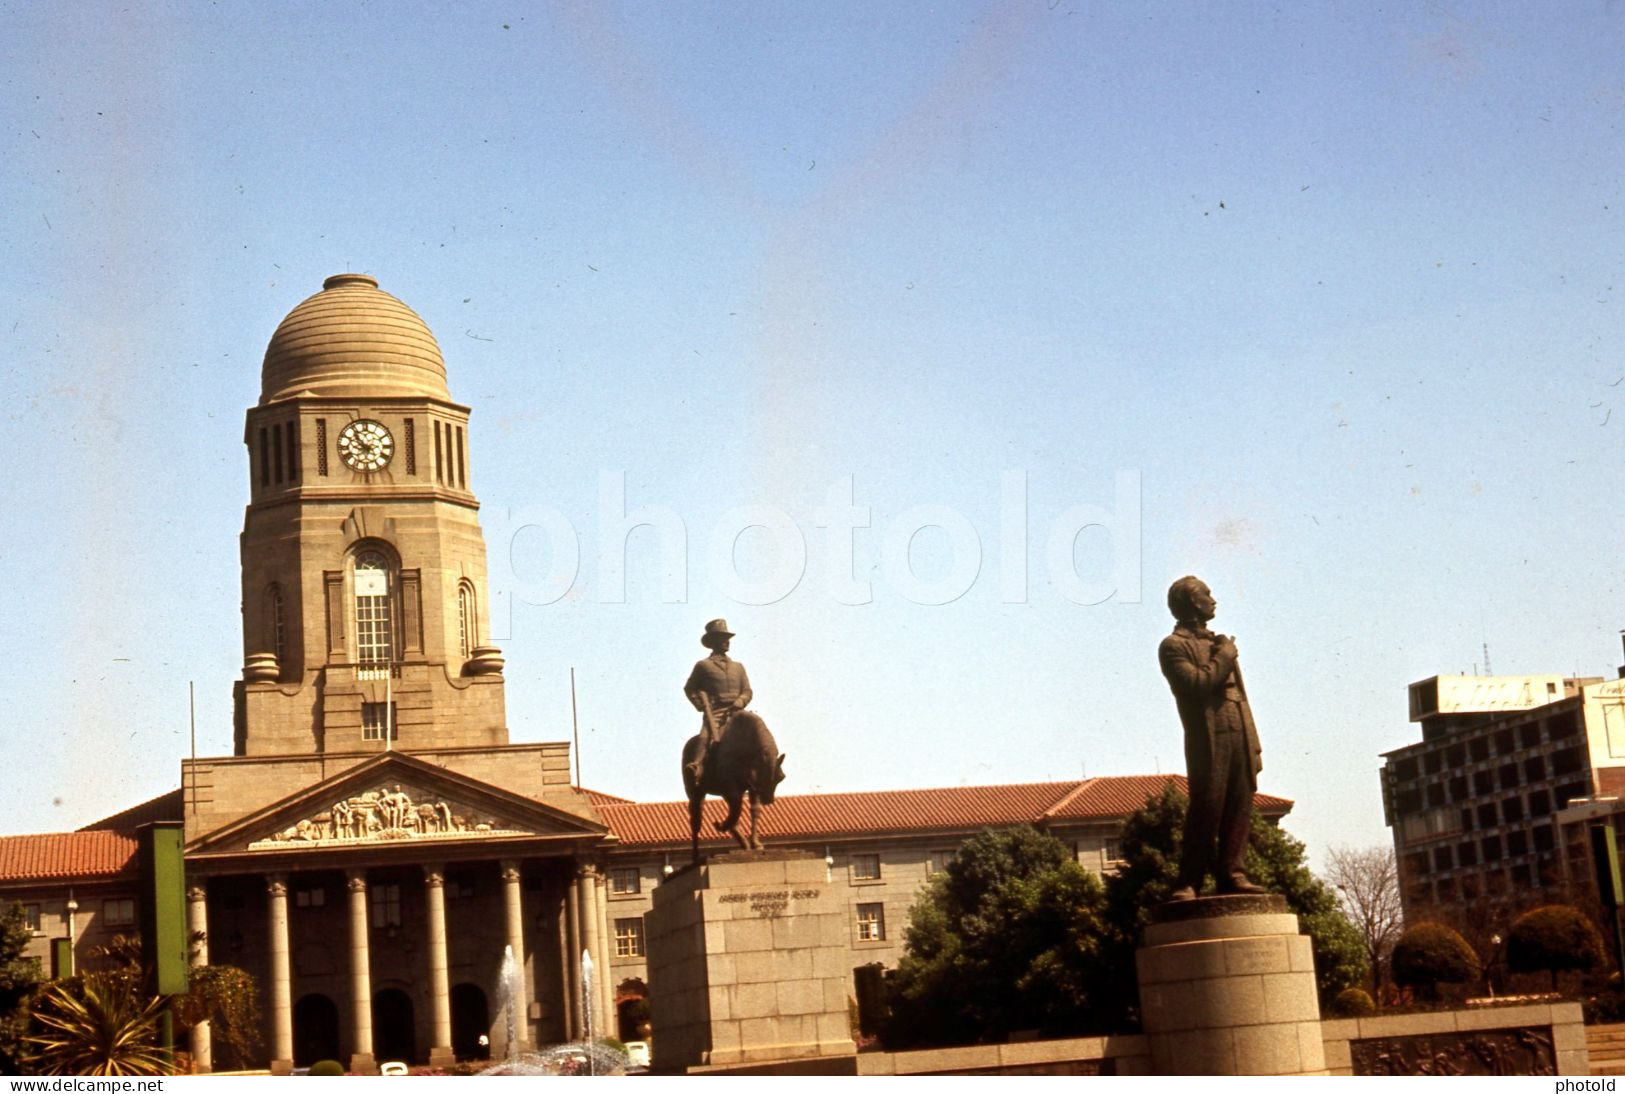 15 SLIDES SET 1964 JOHANNESBURG PRETORIA SOUTH AFRICA AFRIQUE AMATEUR 35mm SLIDE NOT PHOTO FOTO nb4122